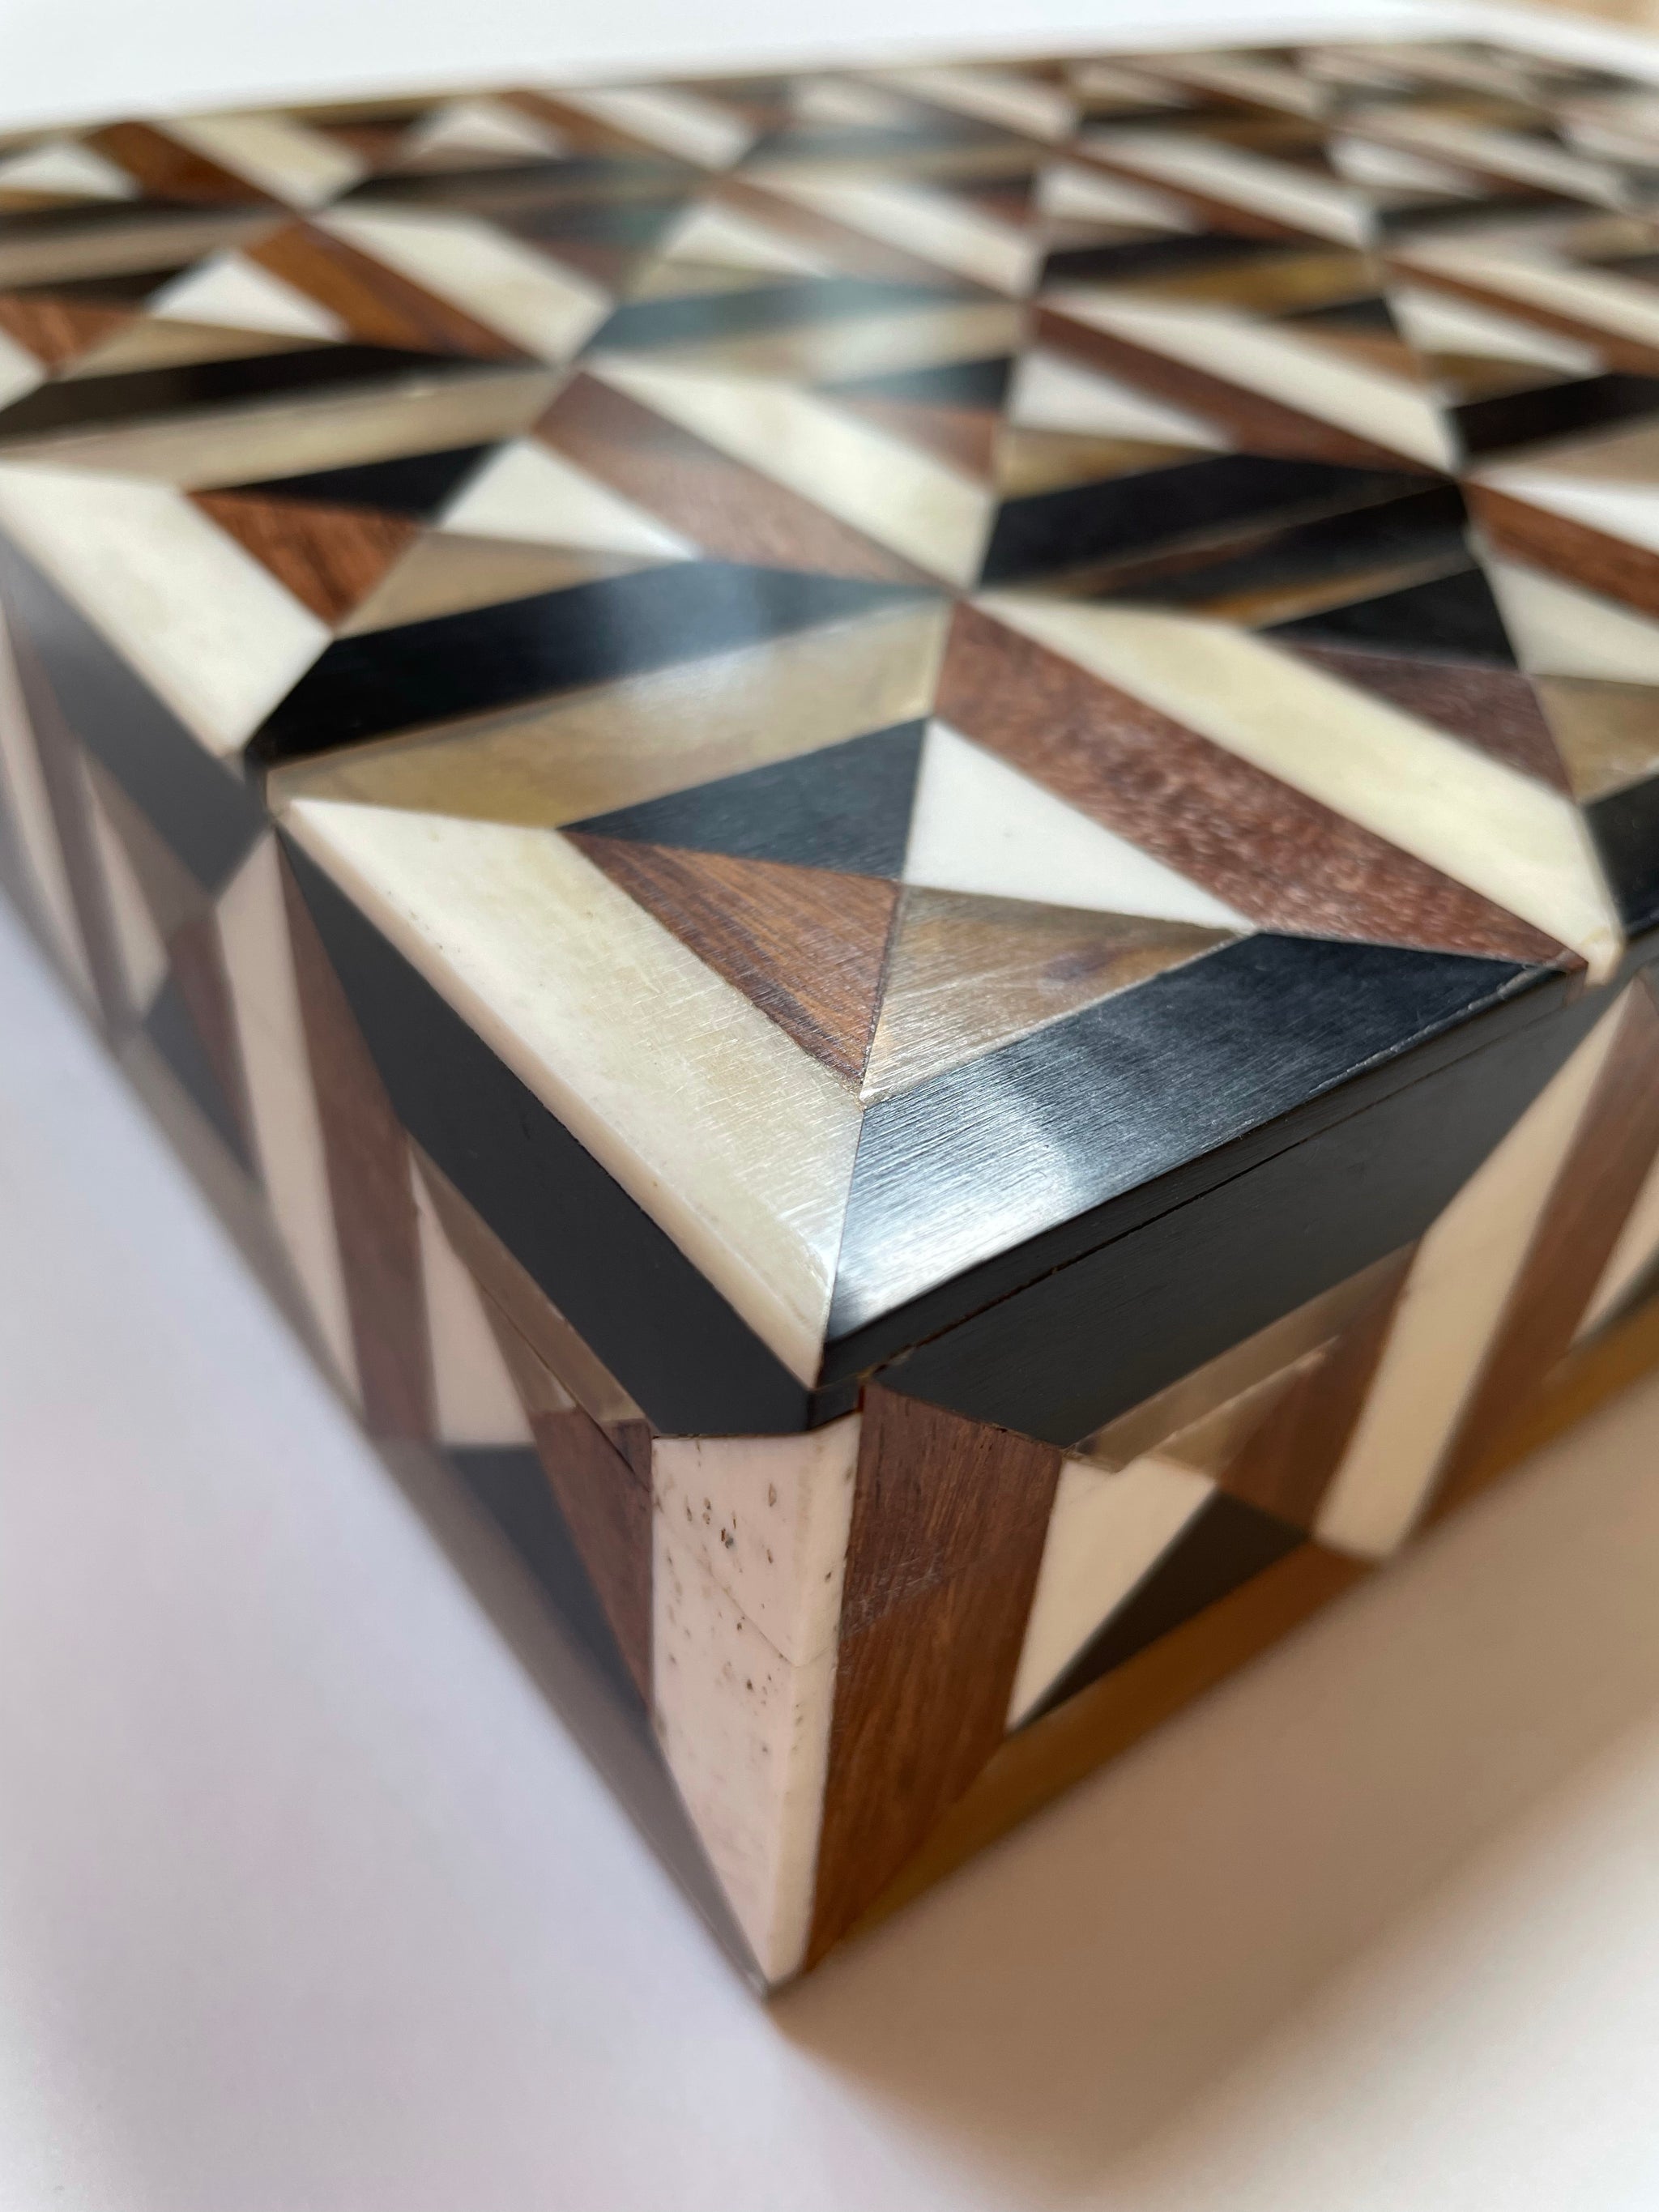 Geometric design box with bone and wood inlay